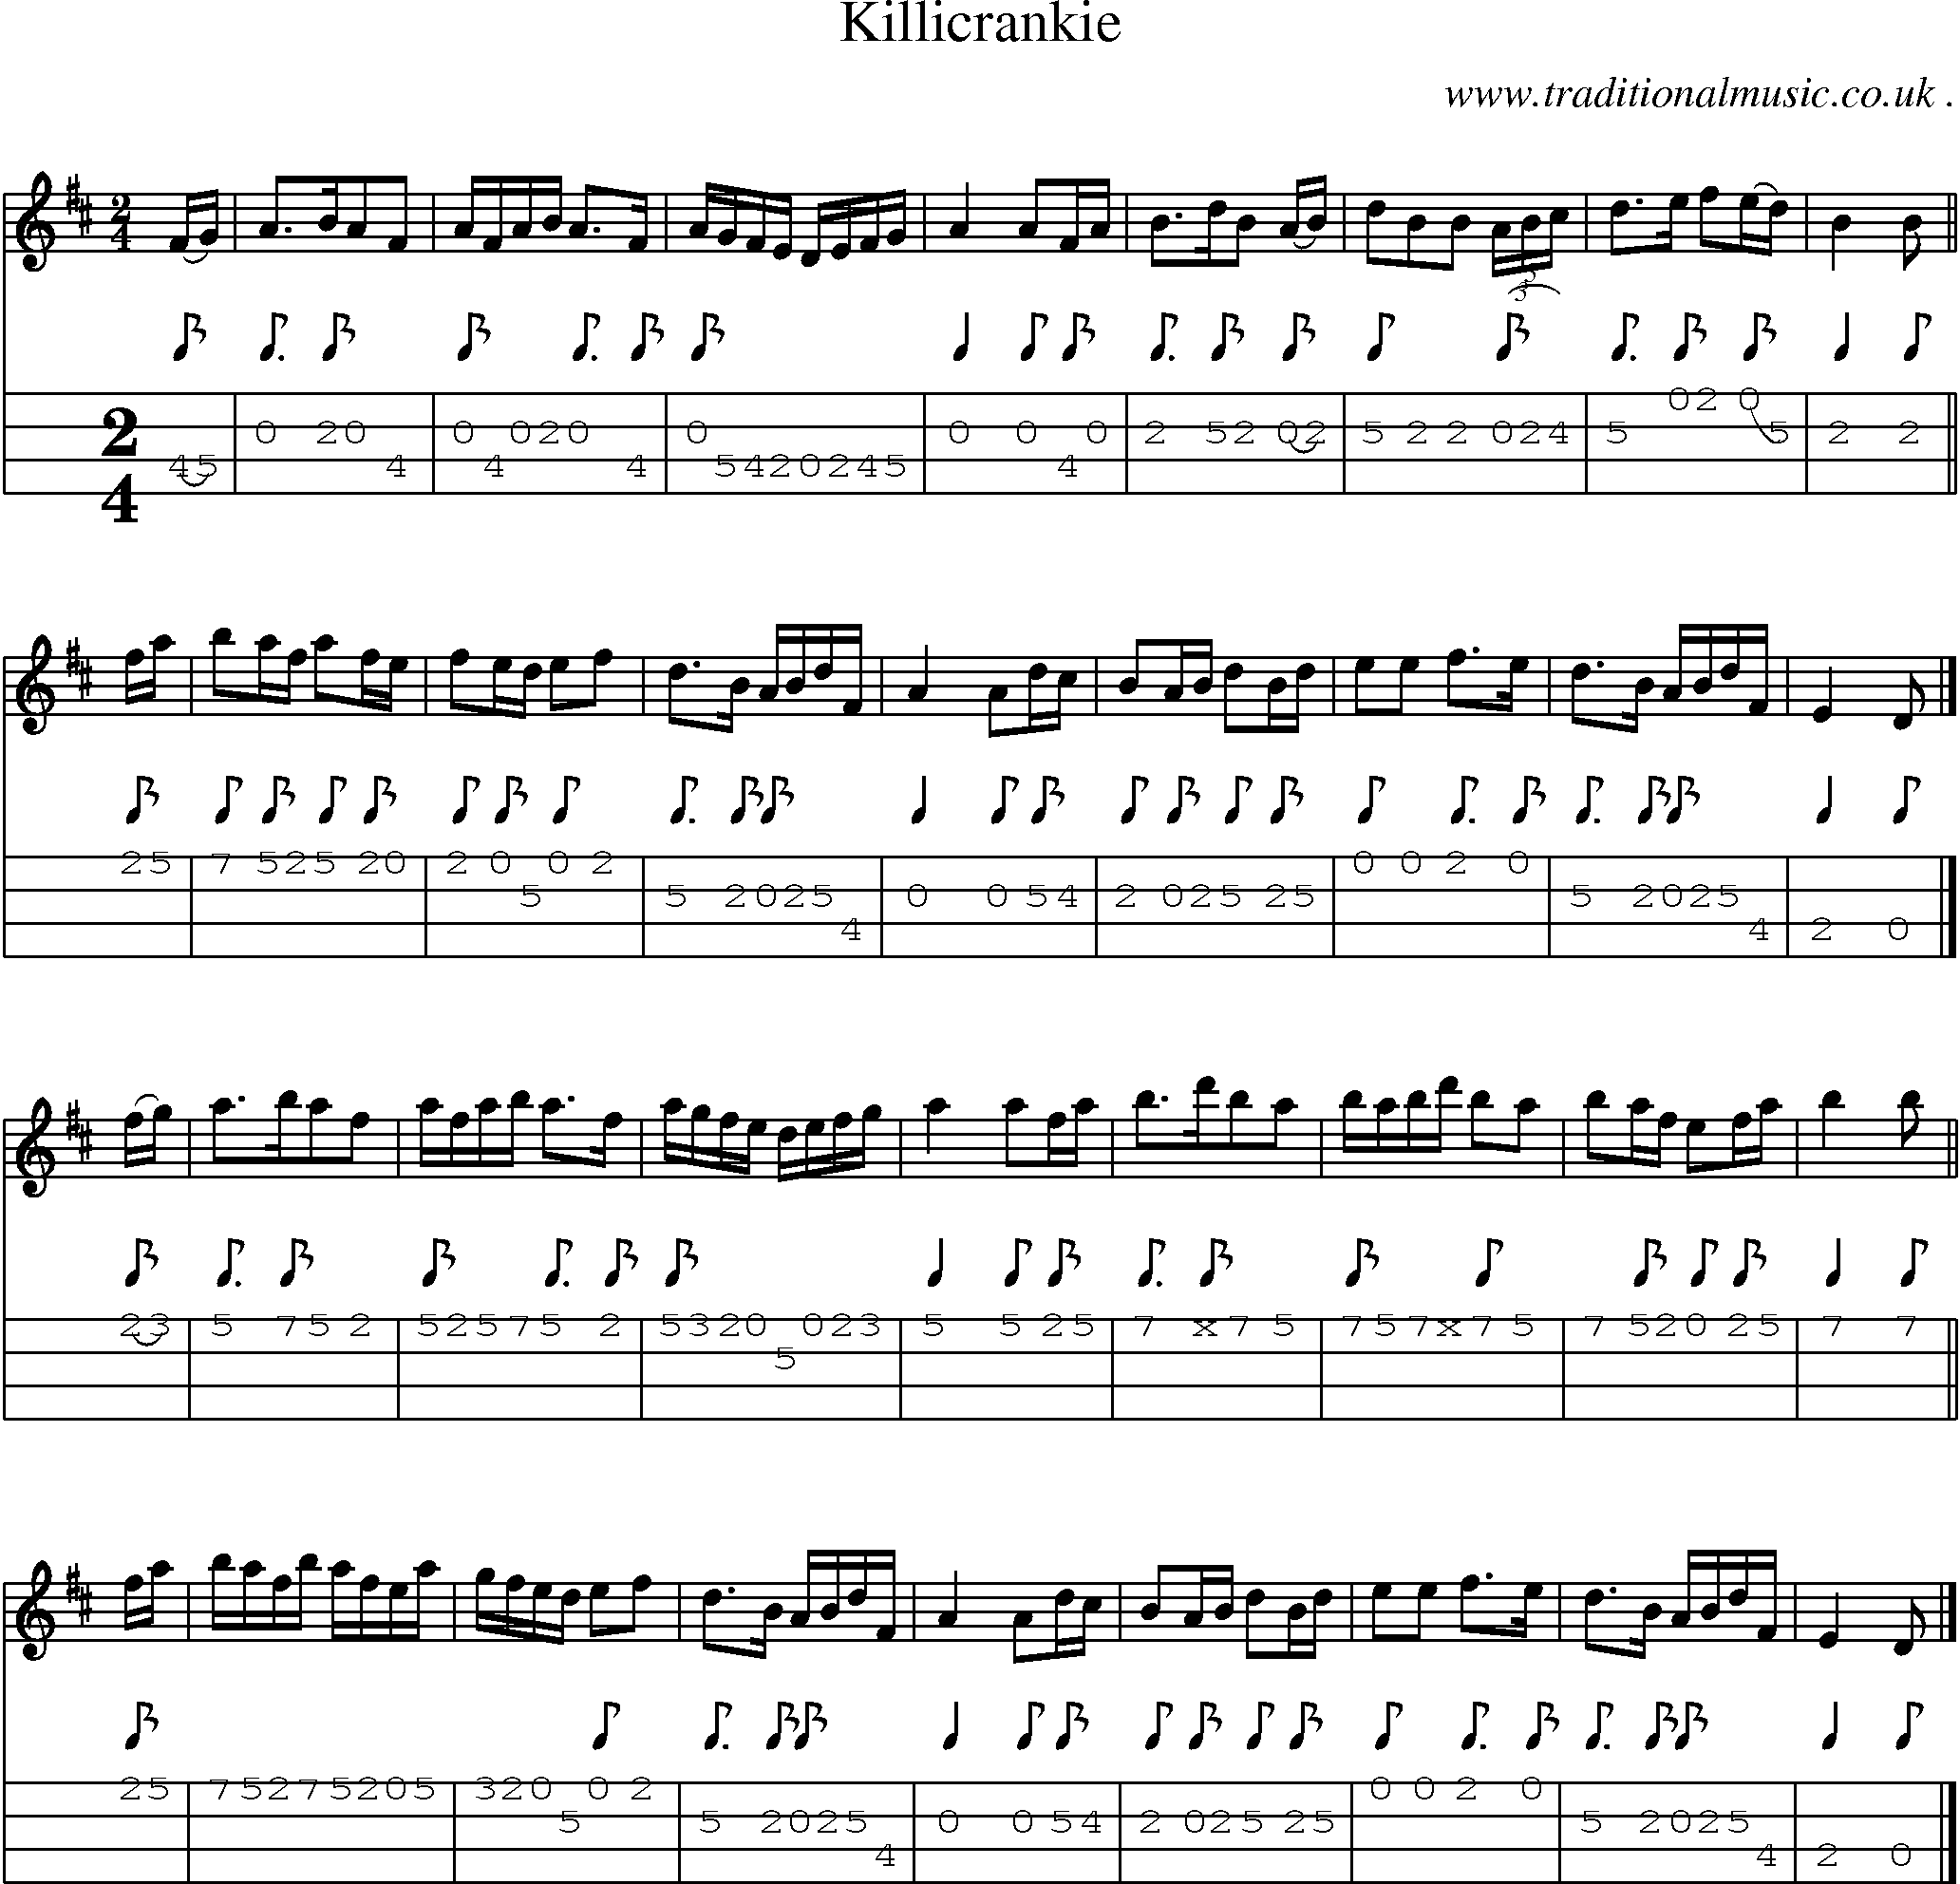 Sheet-music  score, Chords and Mandolin Tabs for Killicrankie